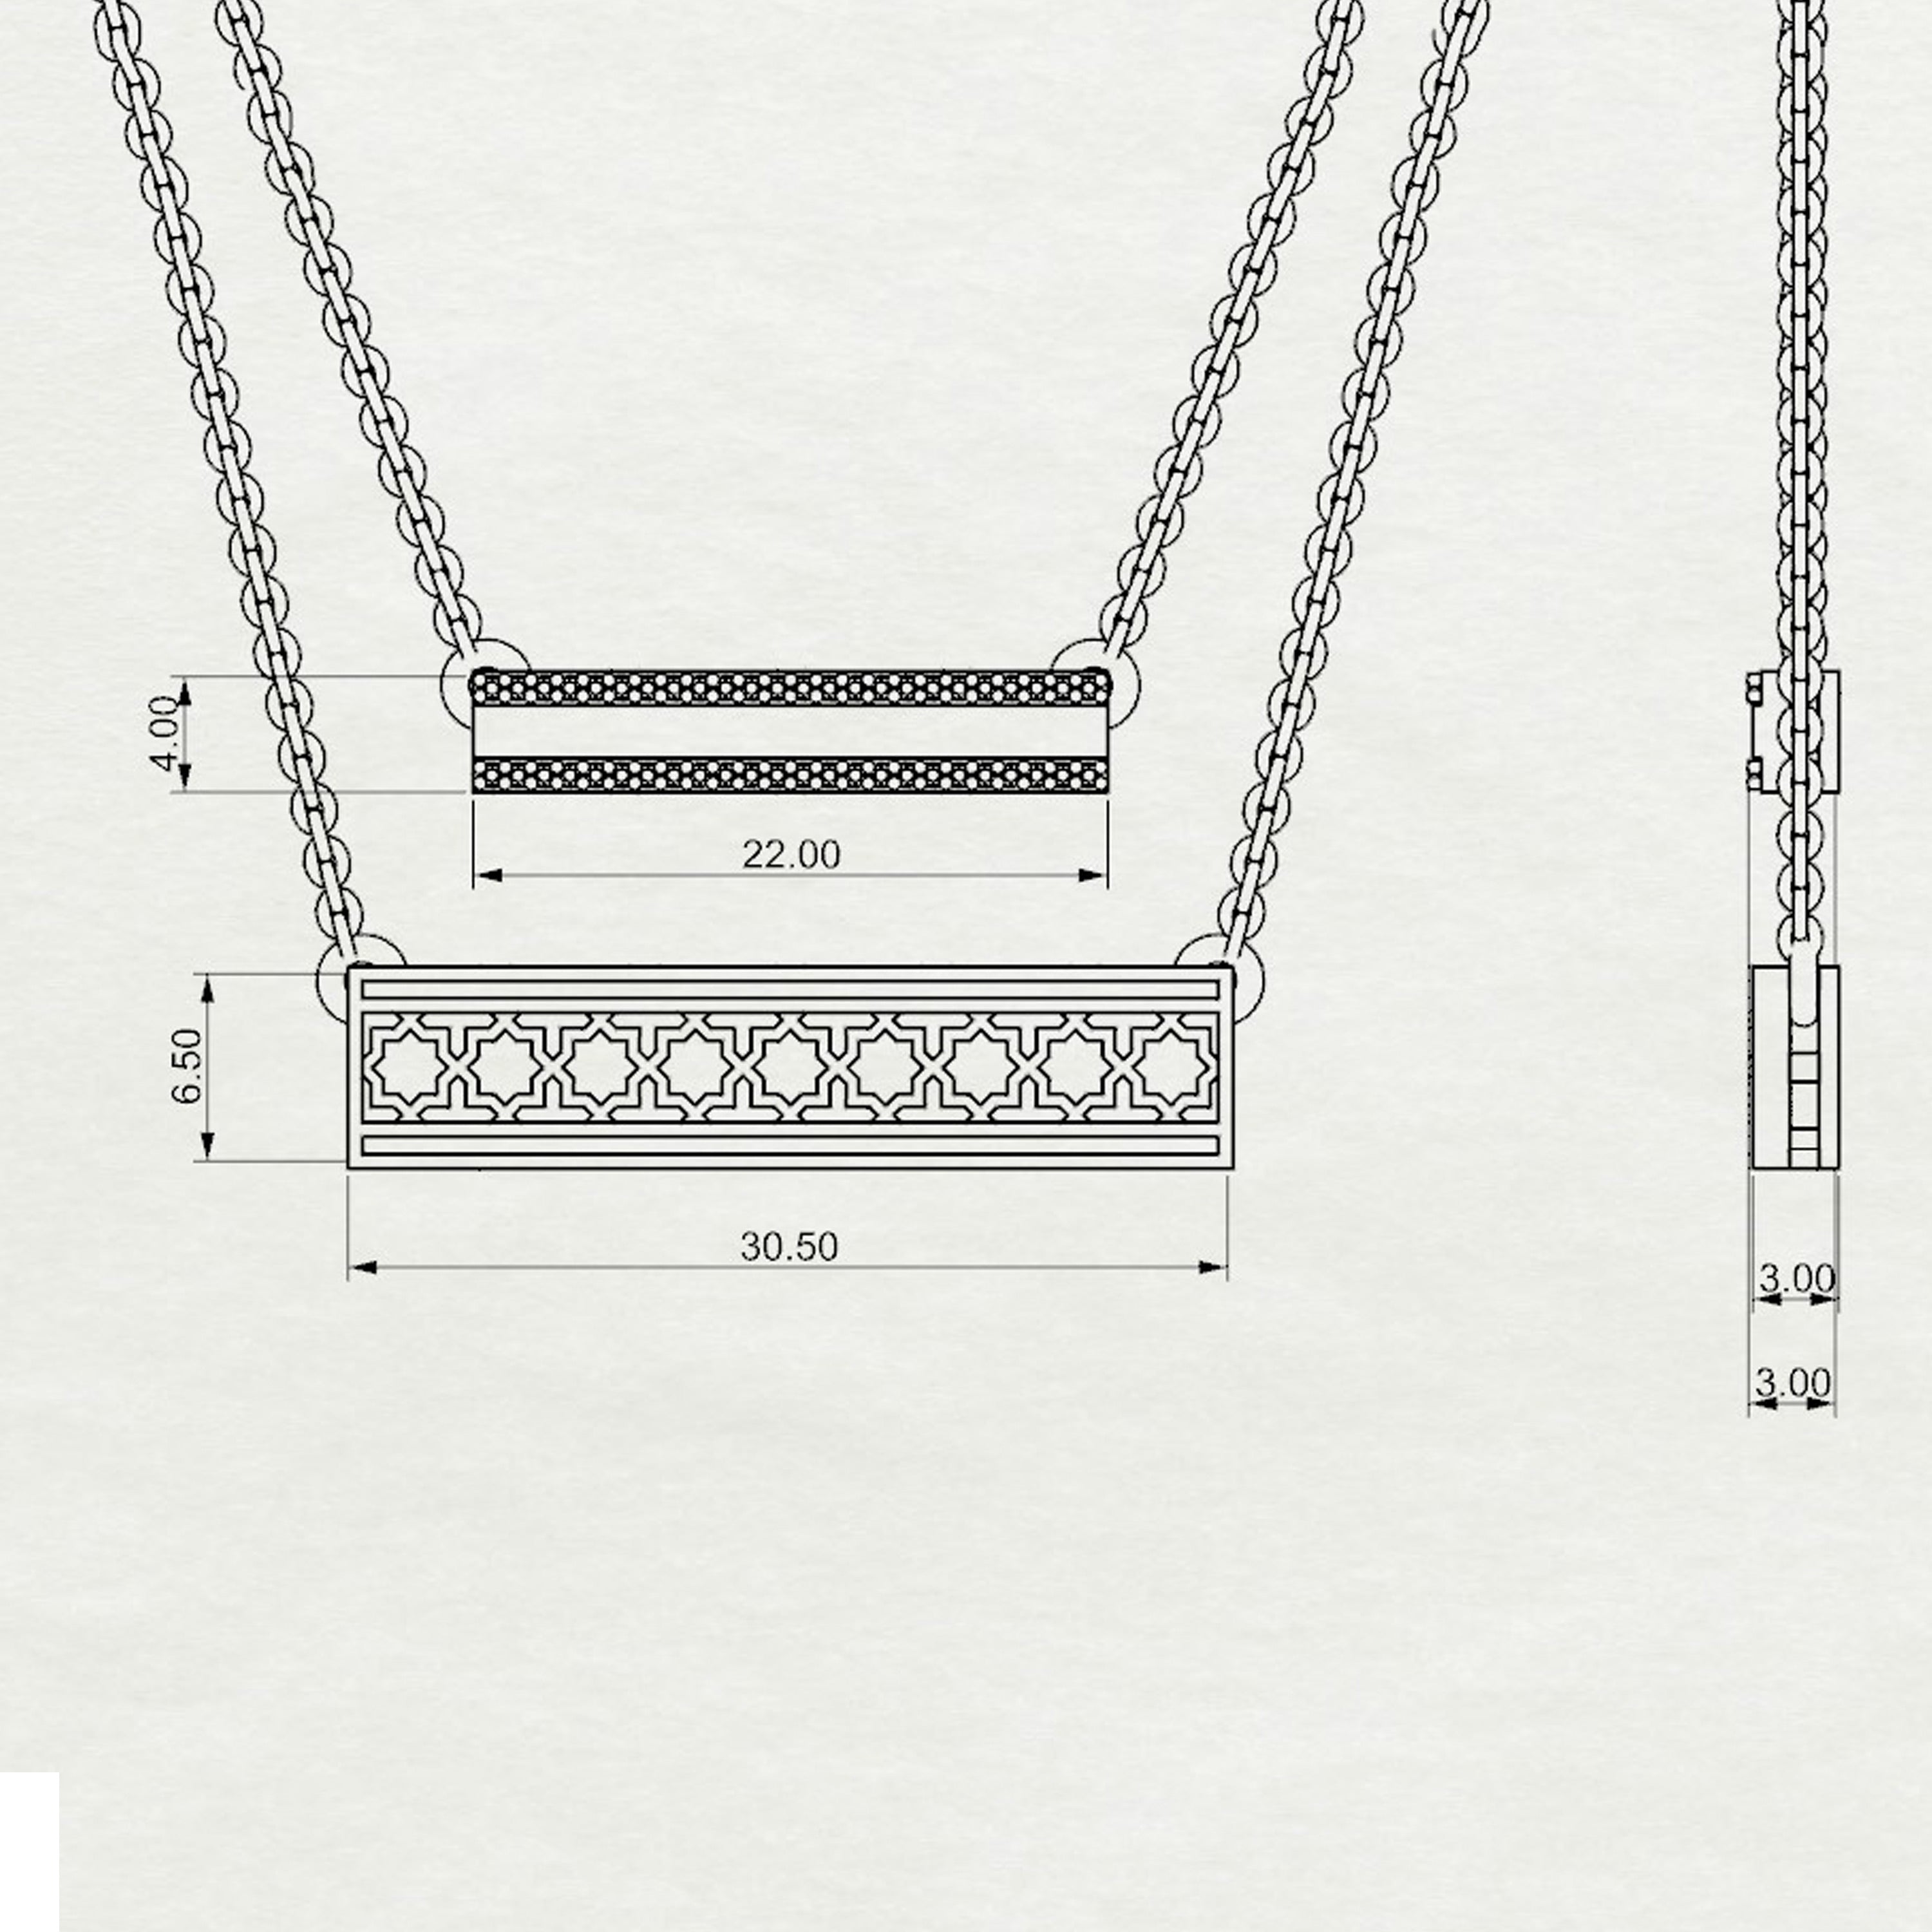 Emira Double Chain horizontal Bar Pendant Medium